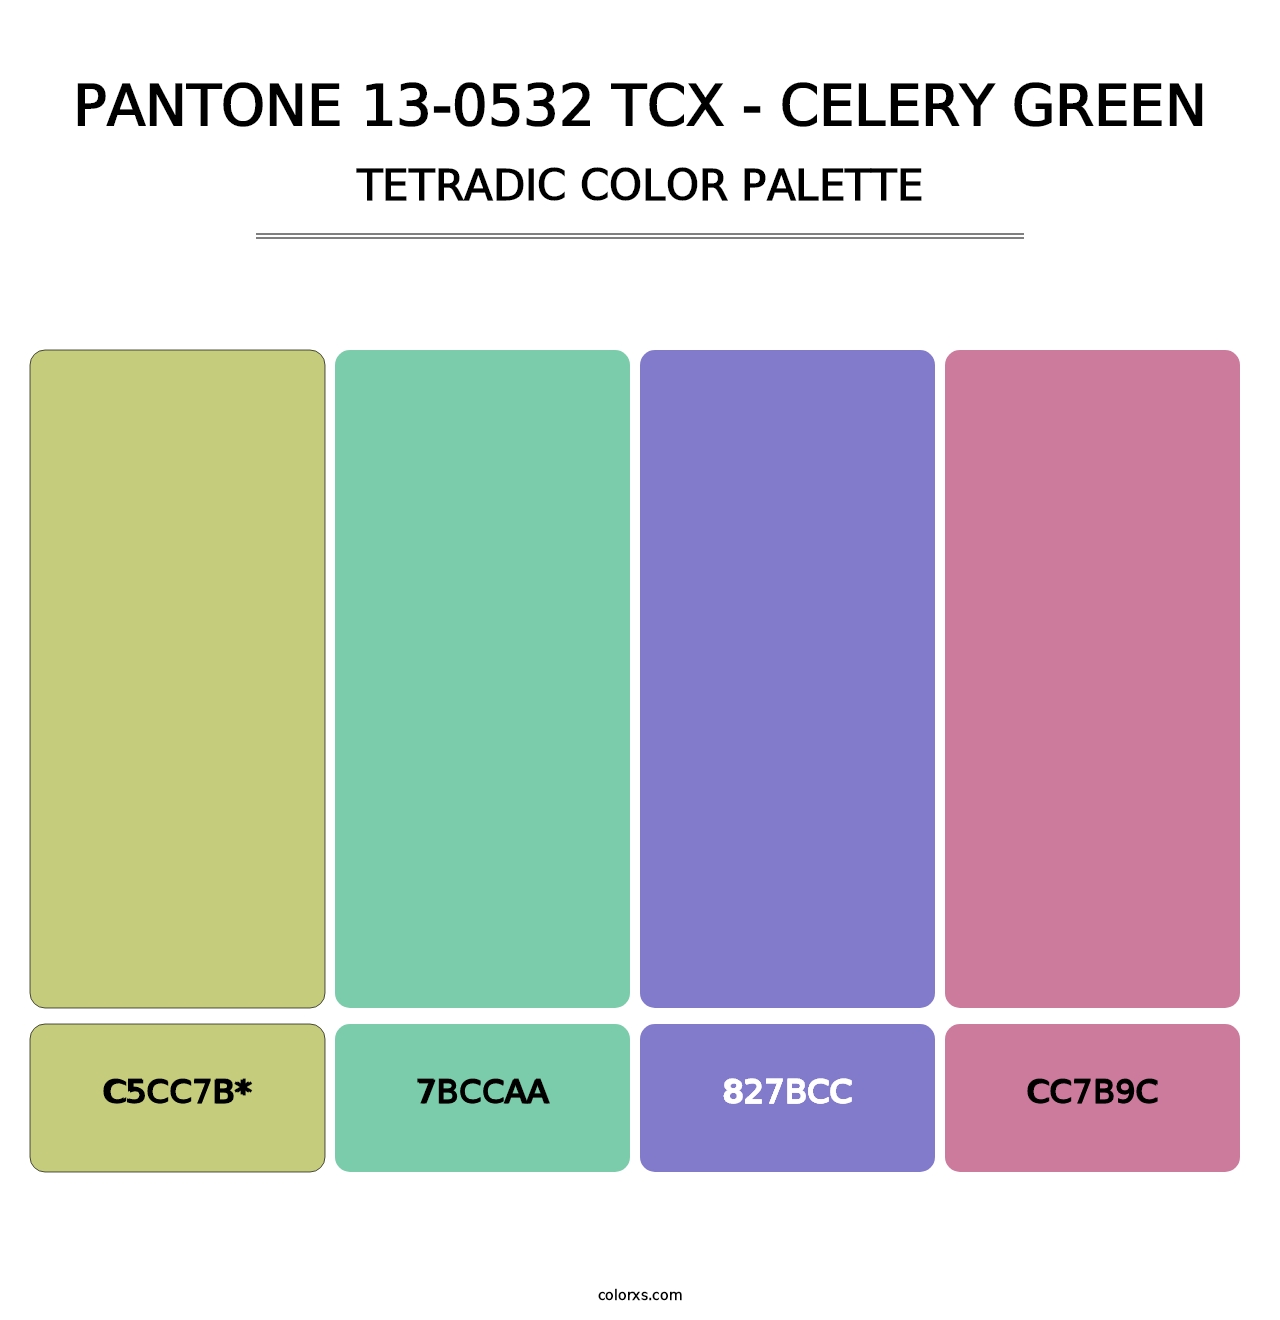 PANTONE 13-0532 TCX - Celery Green - Tetradic Color Palette